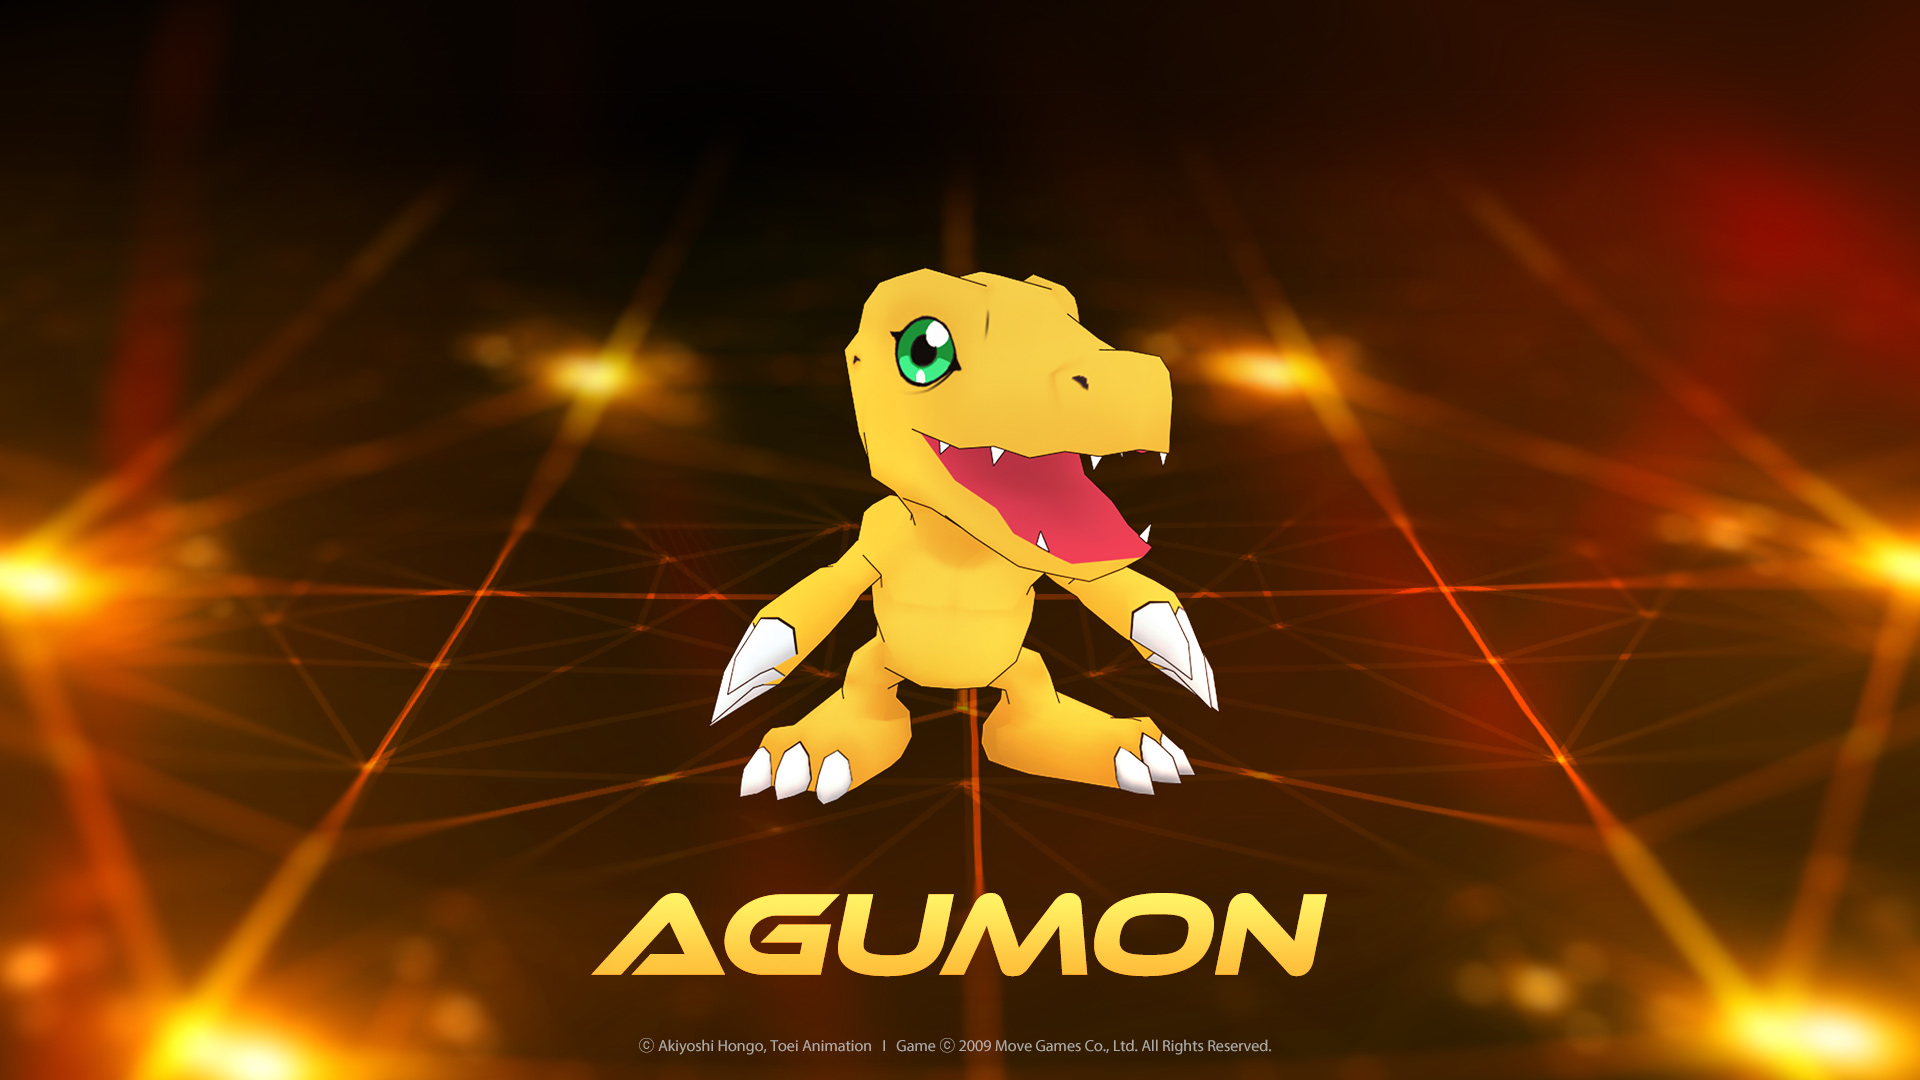 Digimon Masters Online - [Update] Macro Preventer Enhancement - Steam News